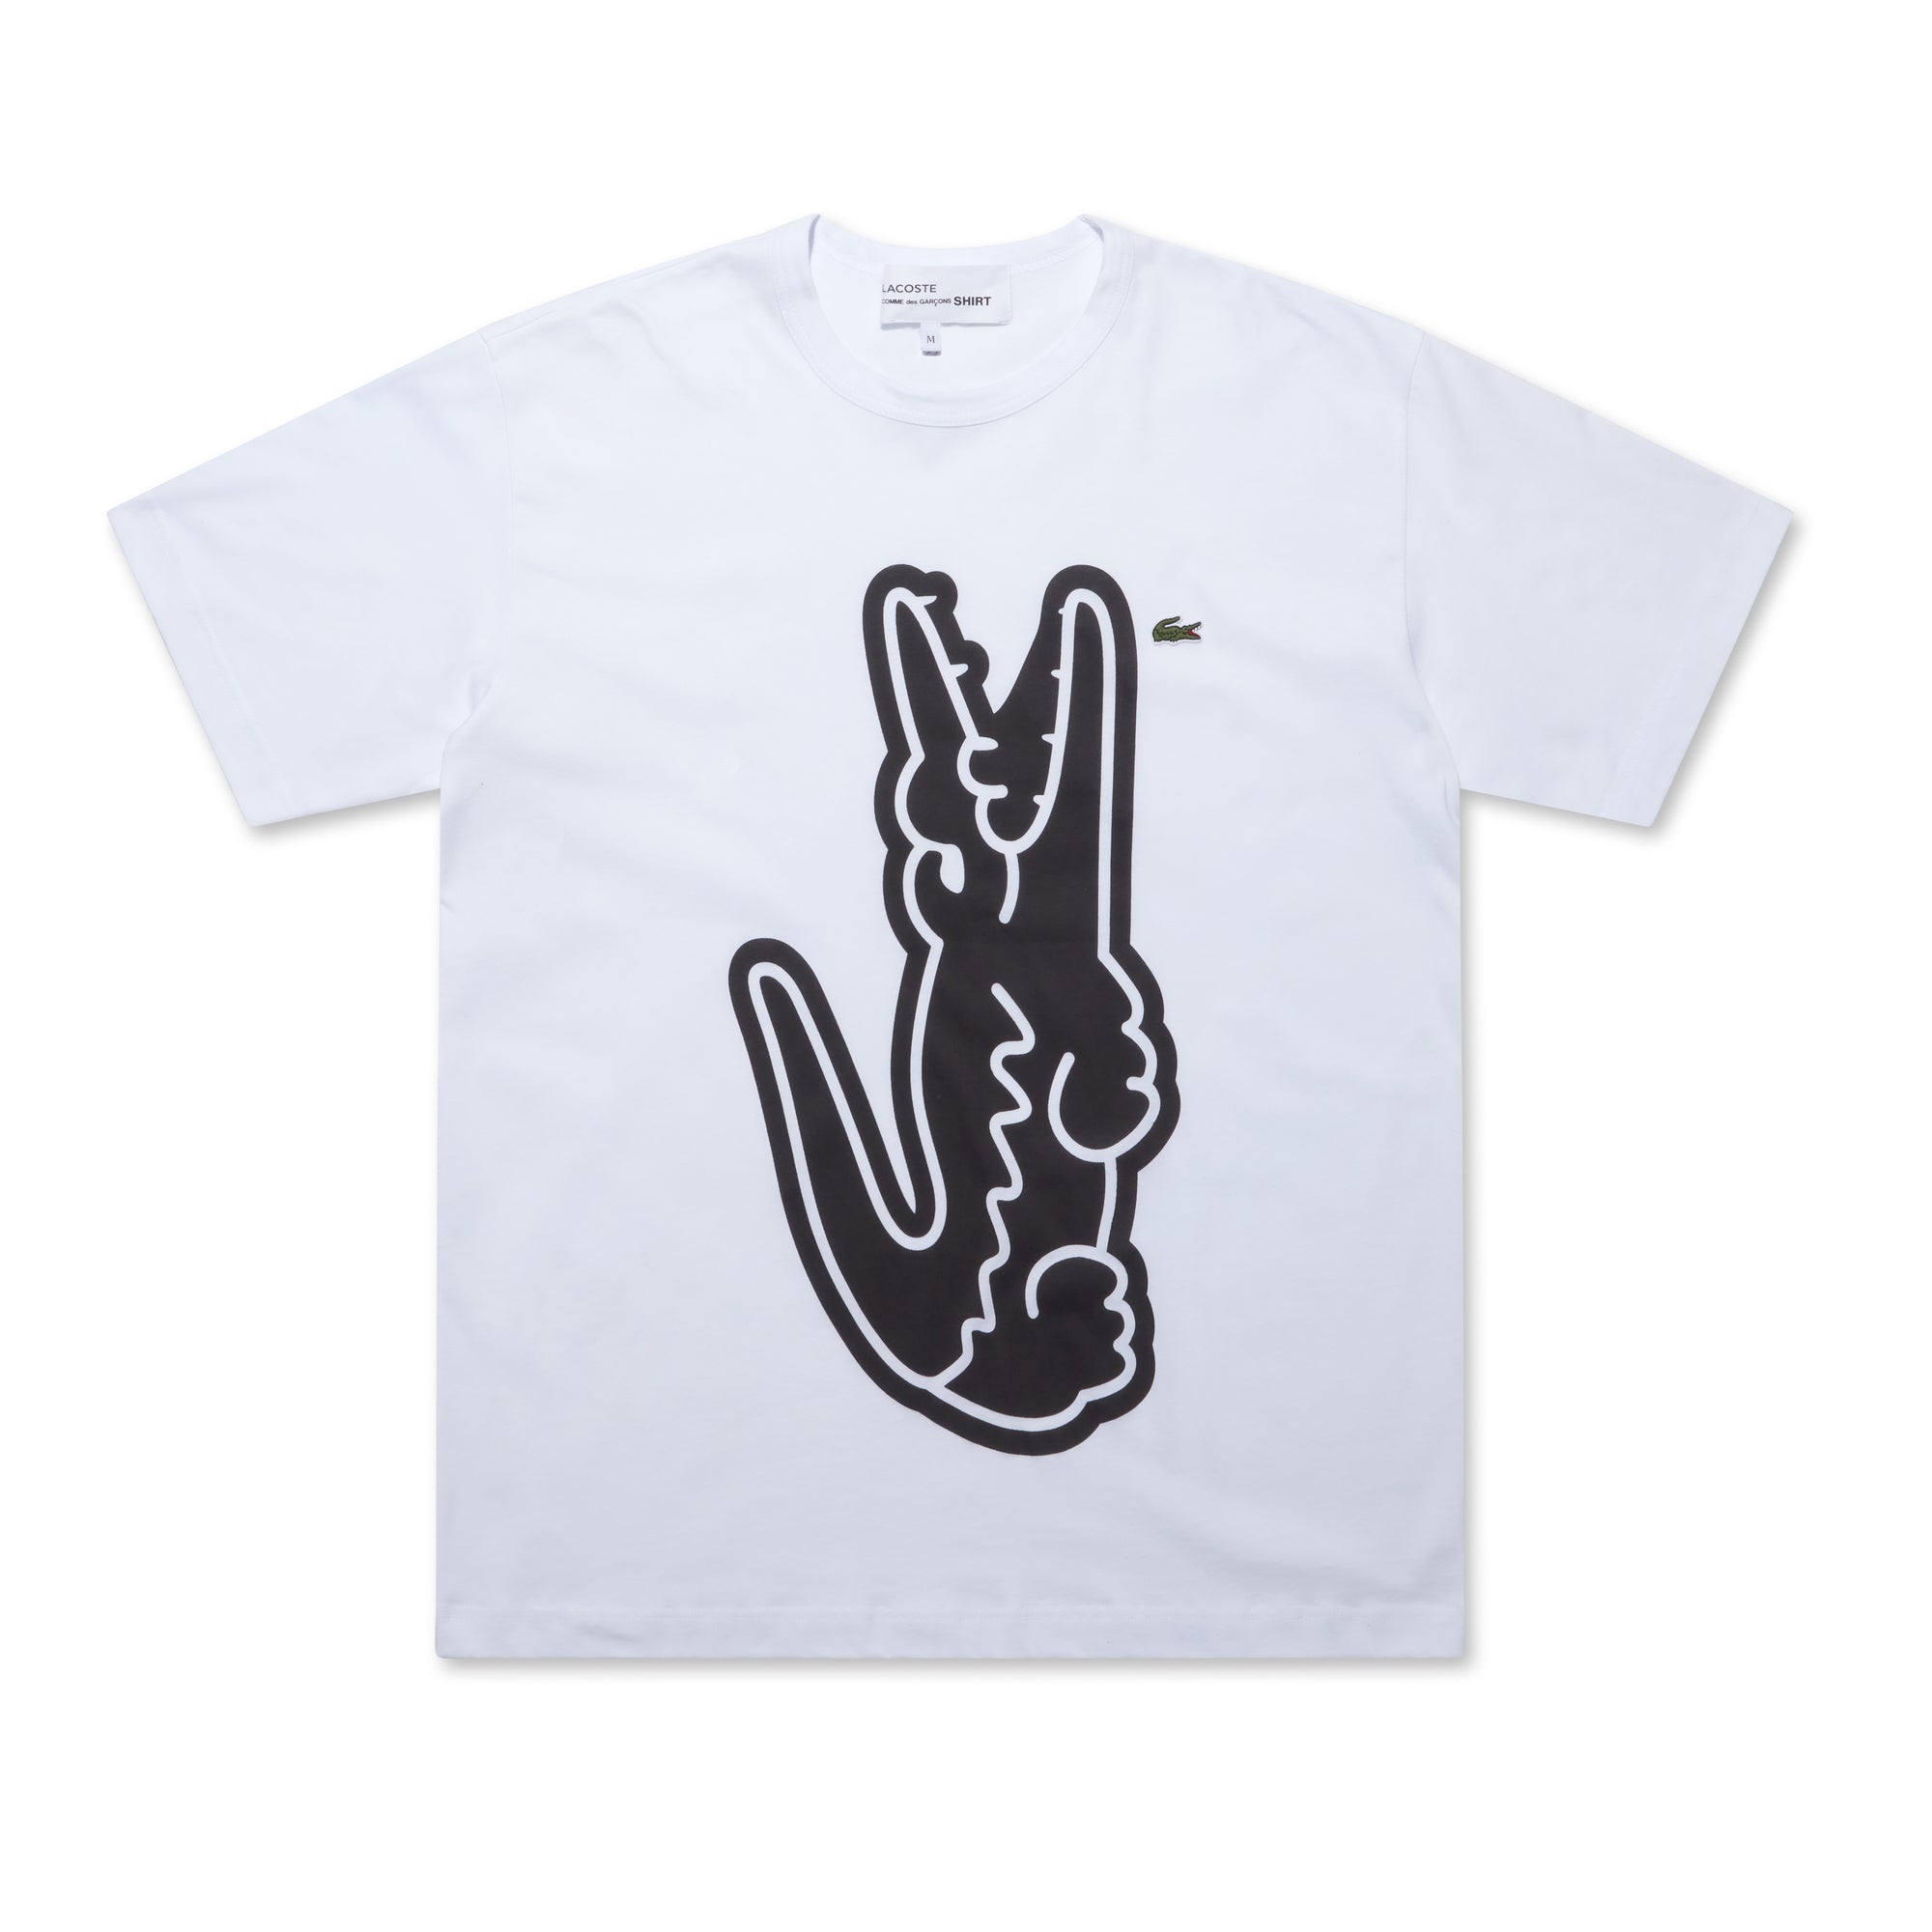 CDG Shirt - Lacoste Men’s Printed T-Shirt - (White) view 5